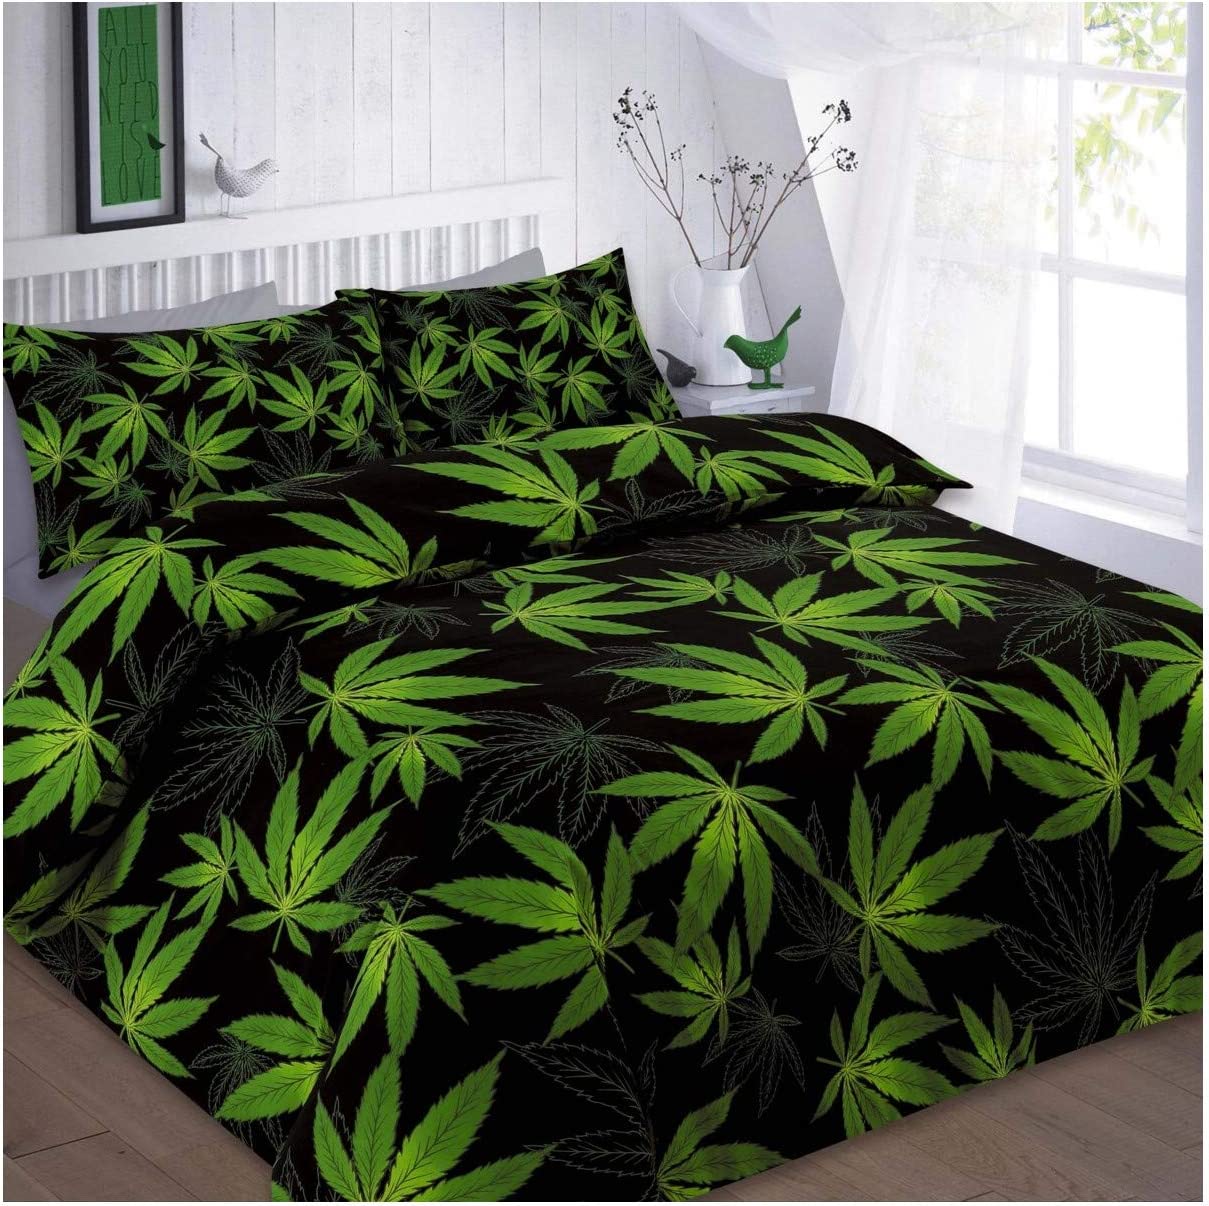 Leaf Duvet Cover Set With Pillow Case Modern Bedroom Weed Leaf Quilt Cover